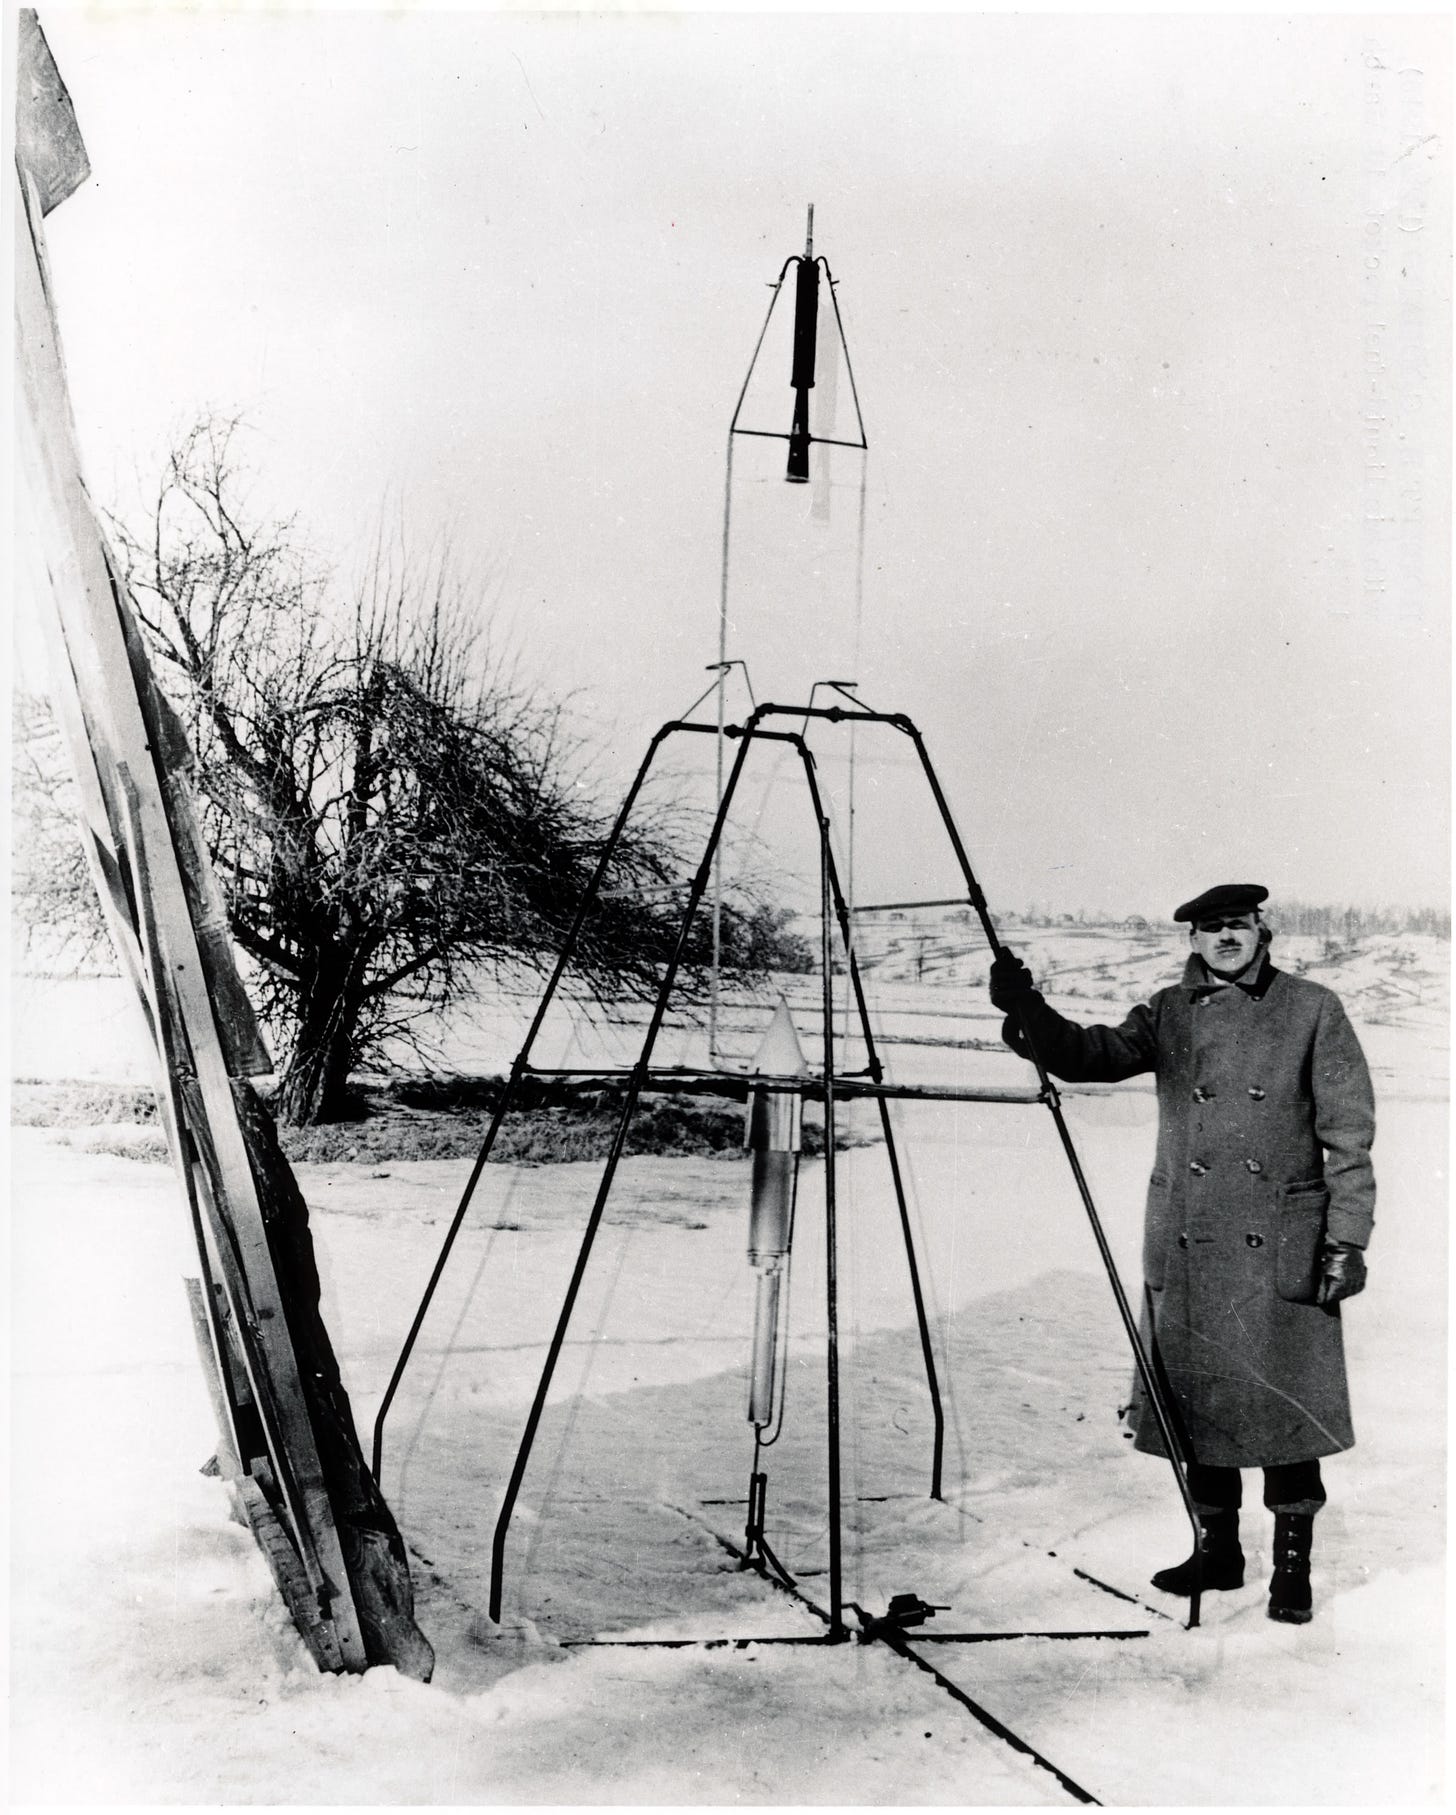 Robert Goddard 1926 and first liquid propellant rocket